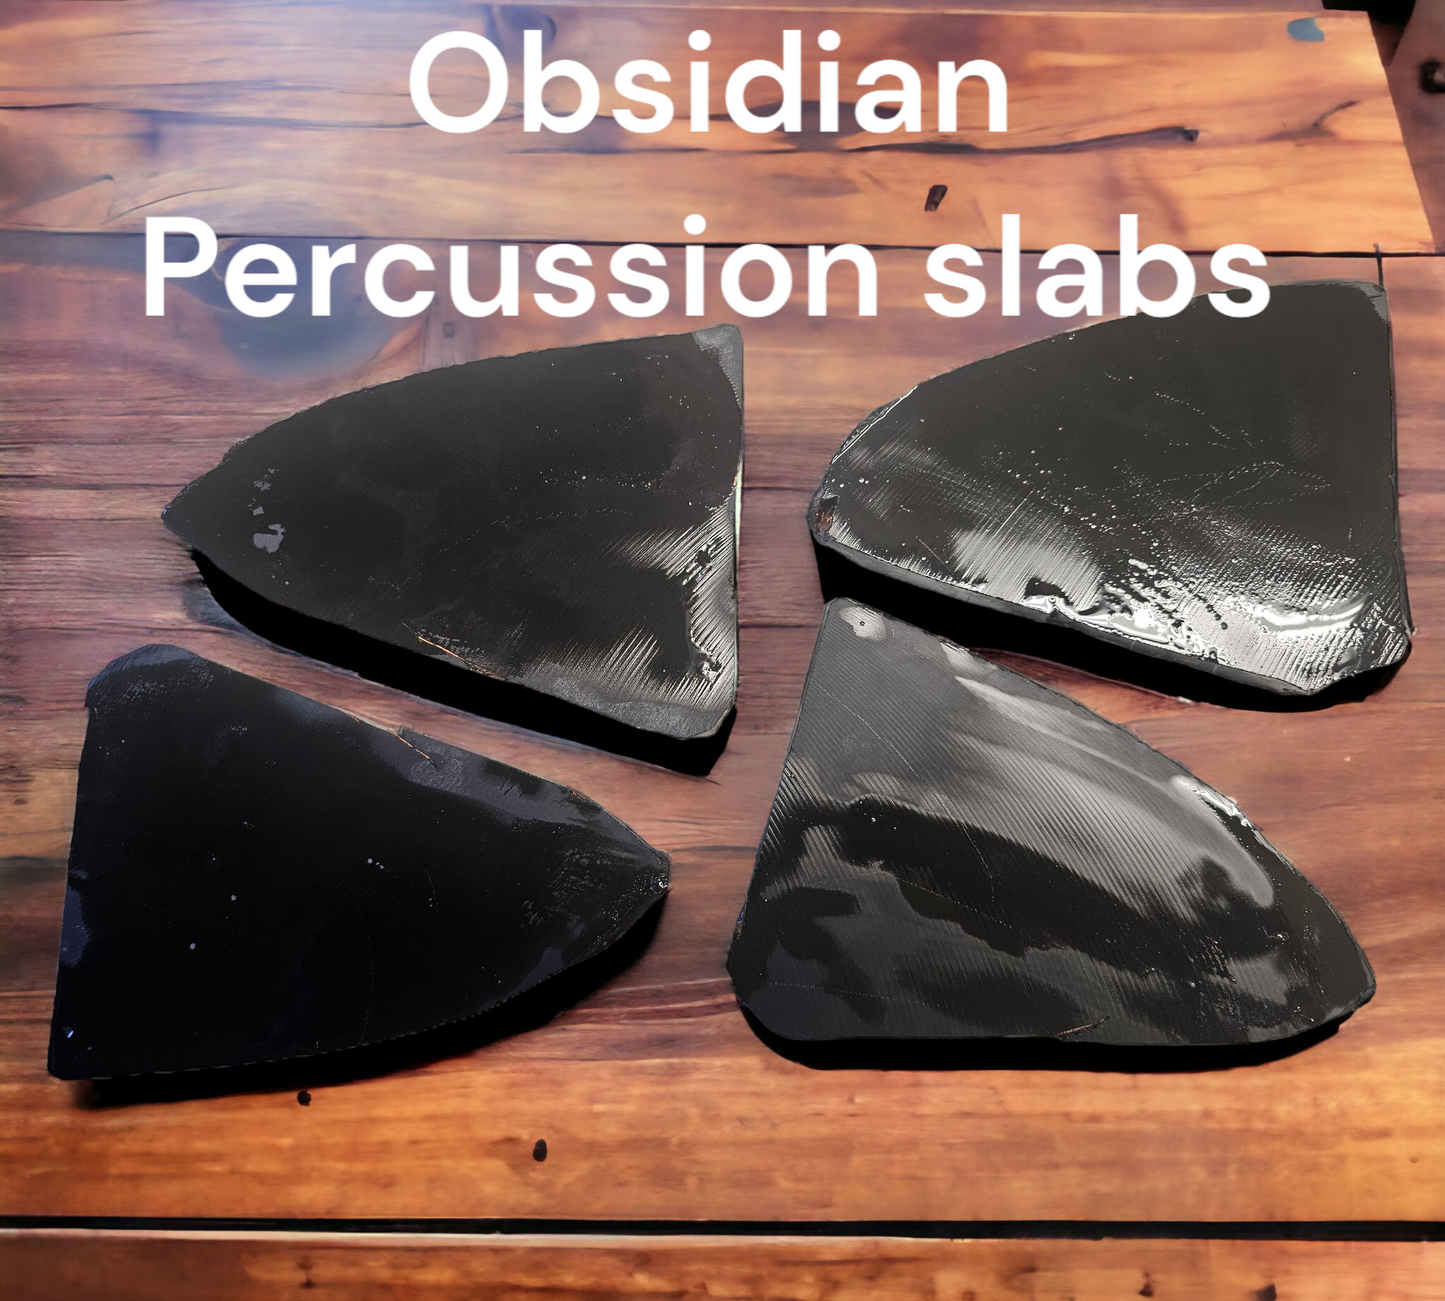 Obsidian Percussion Slabs, Flintknapping Slabs